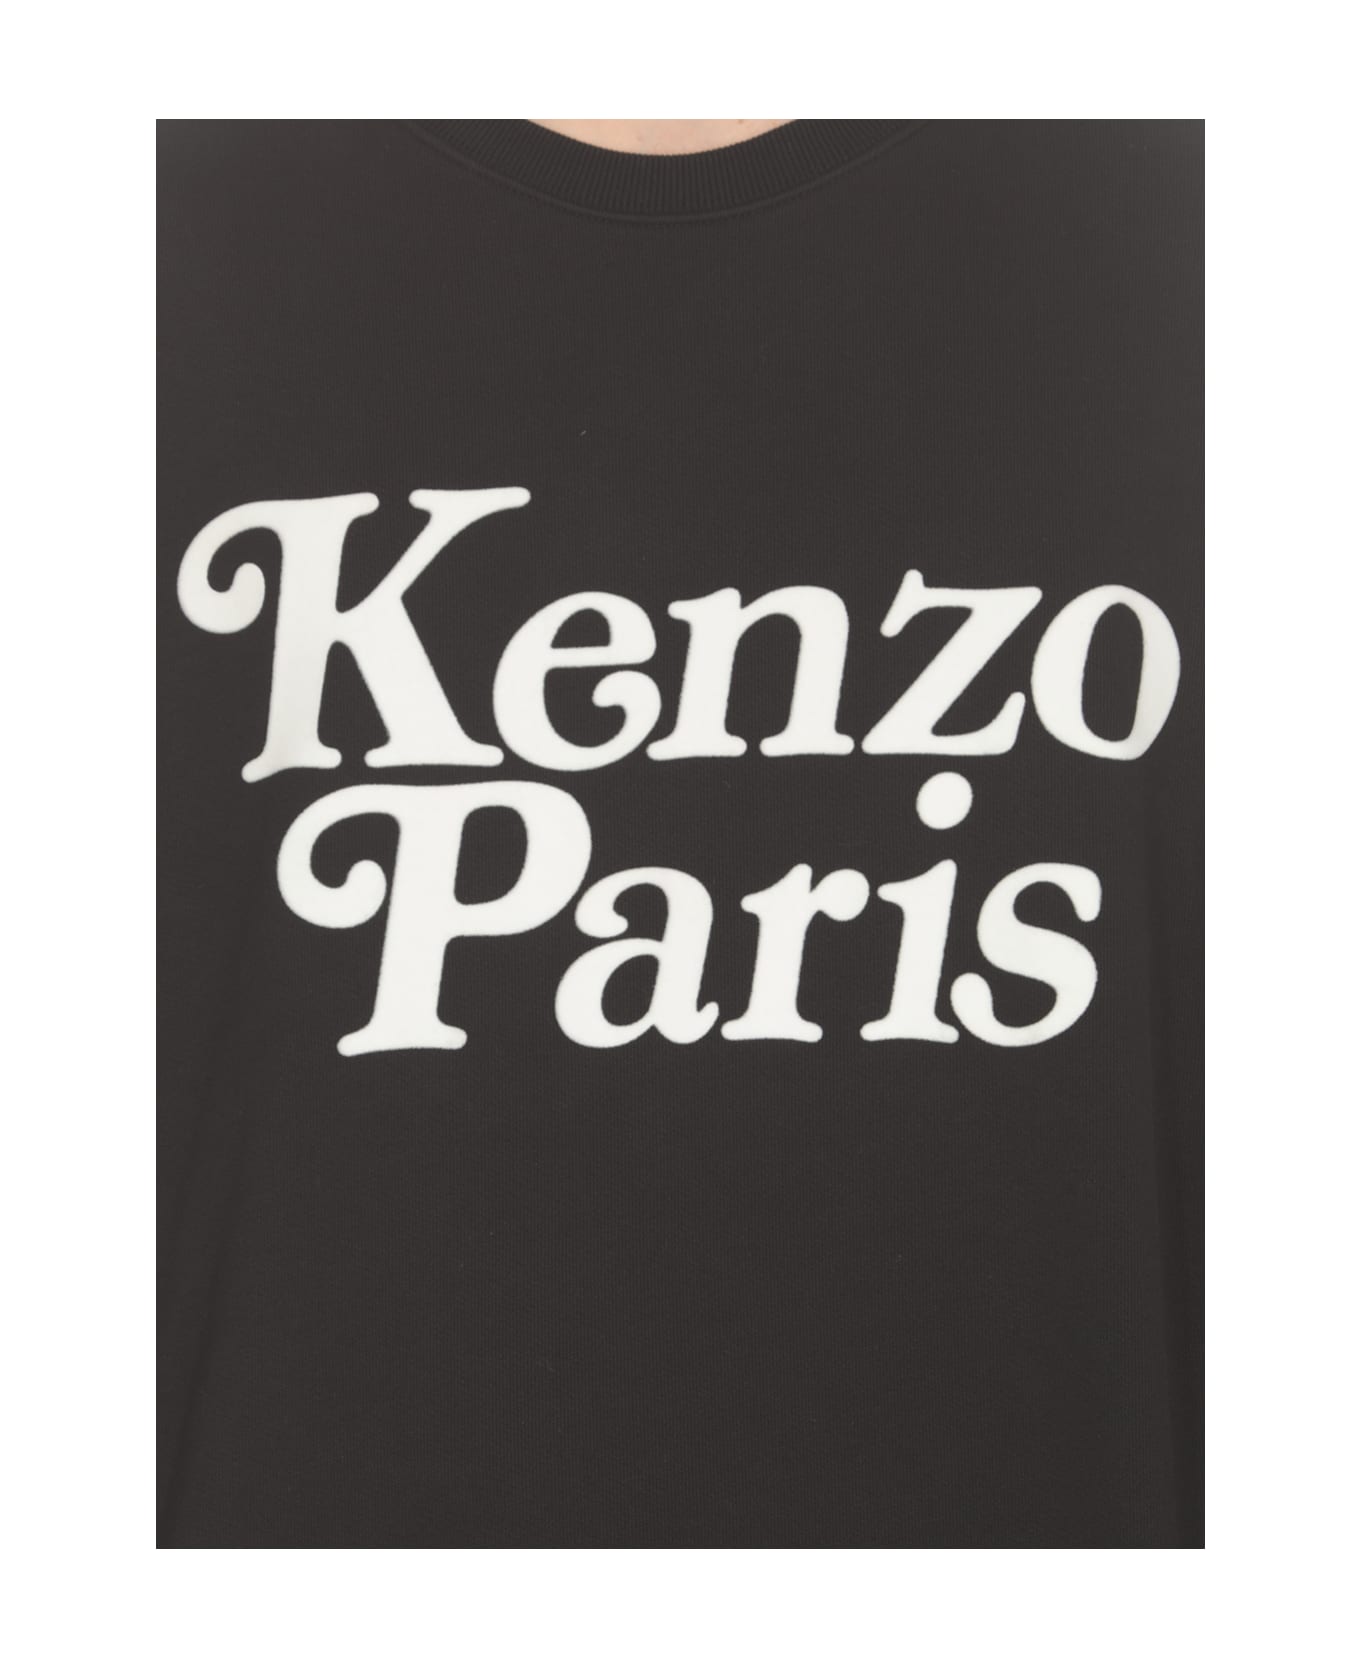 Kenzo By Verdi Sweatshirt - Black フリース